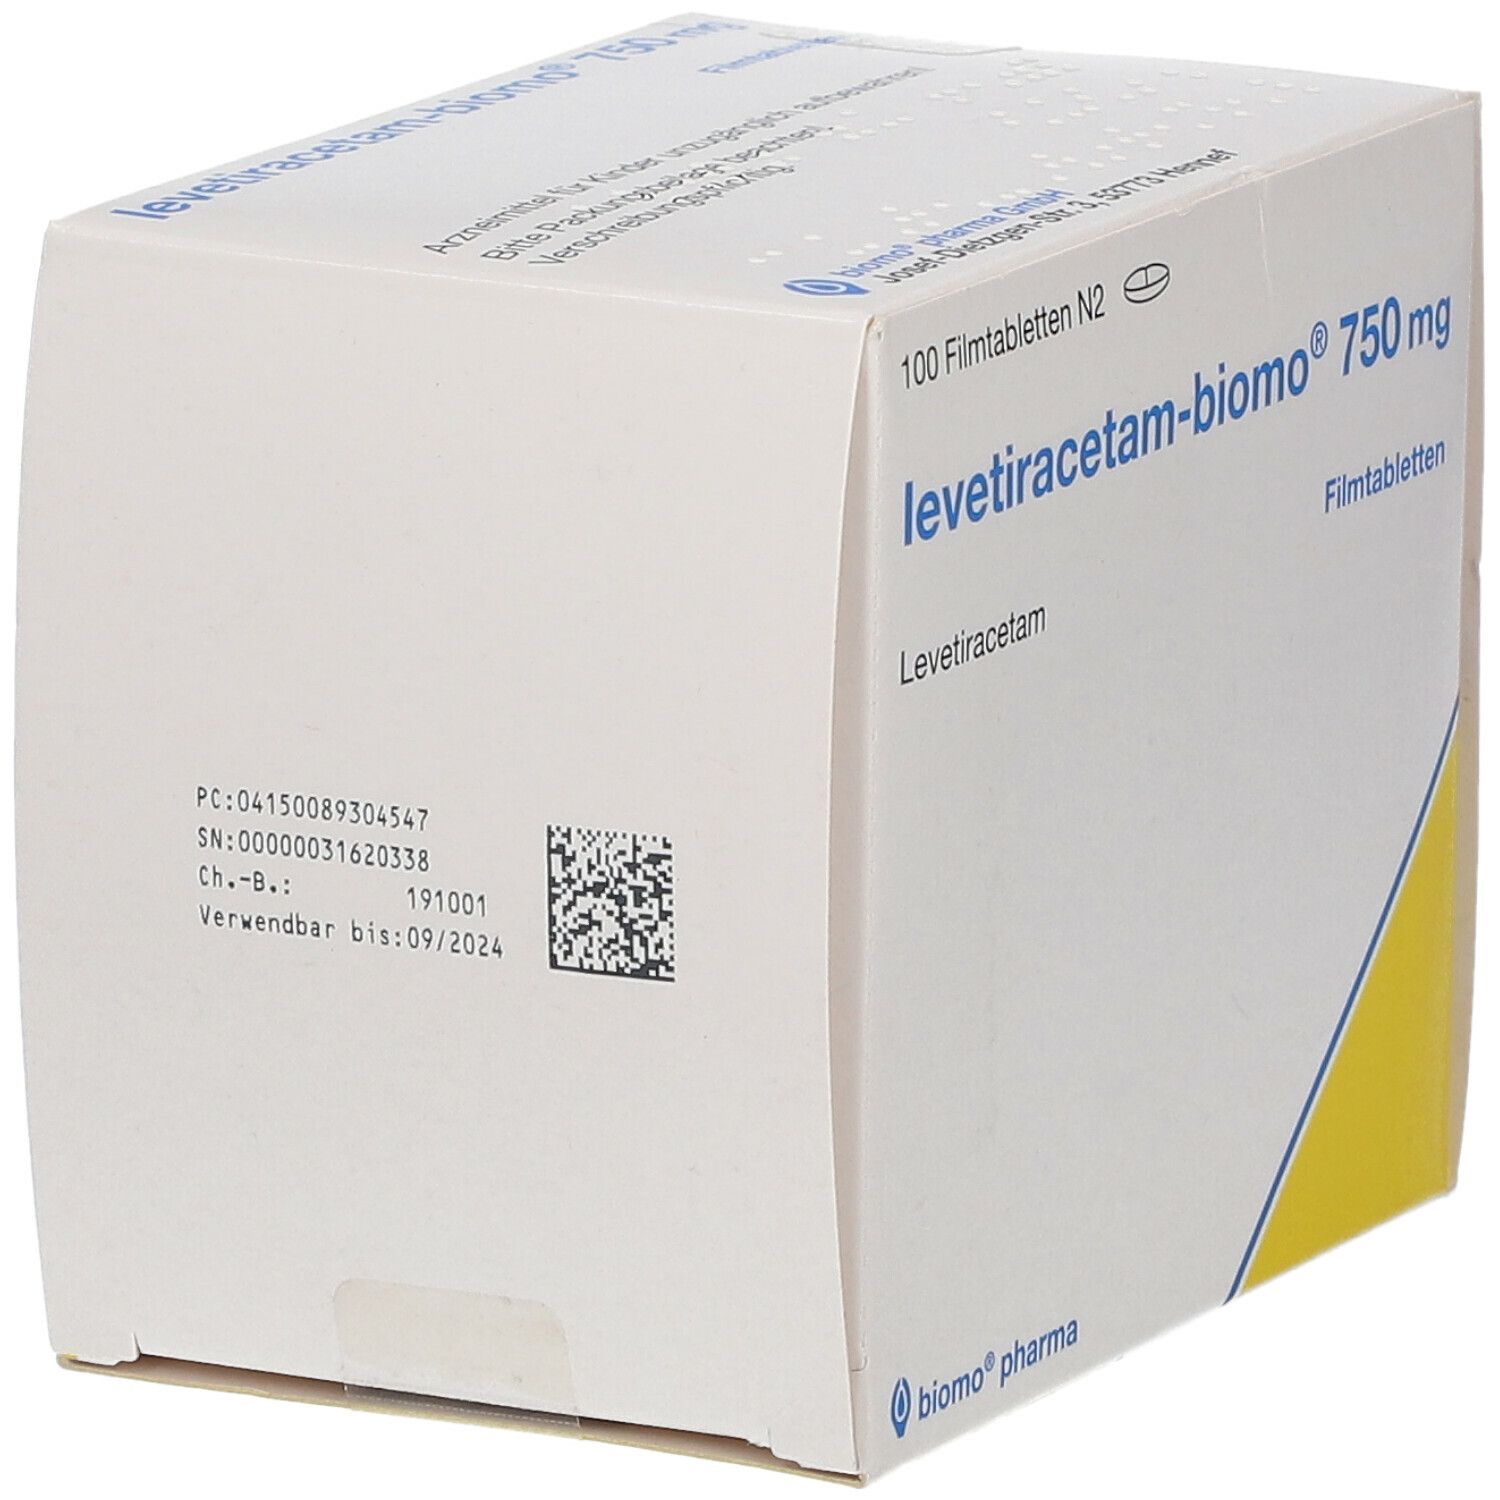 levetiracetam-biomo® 750 mg